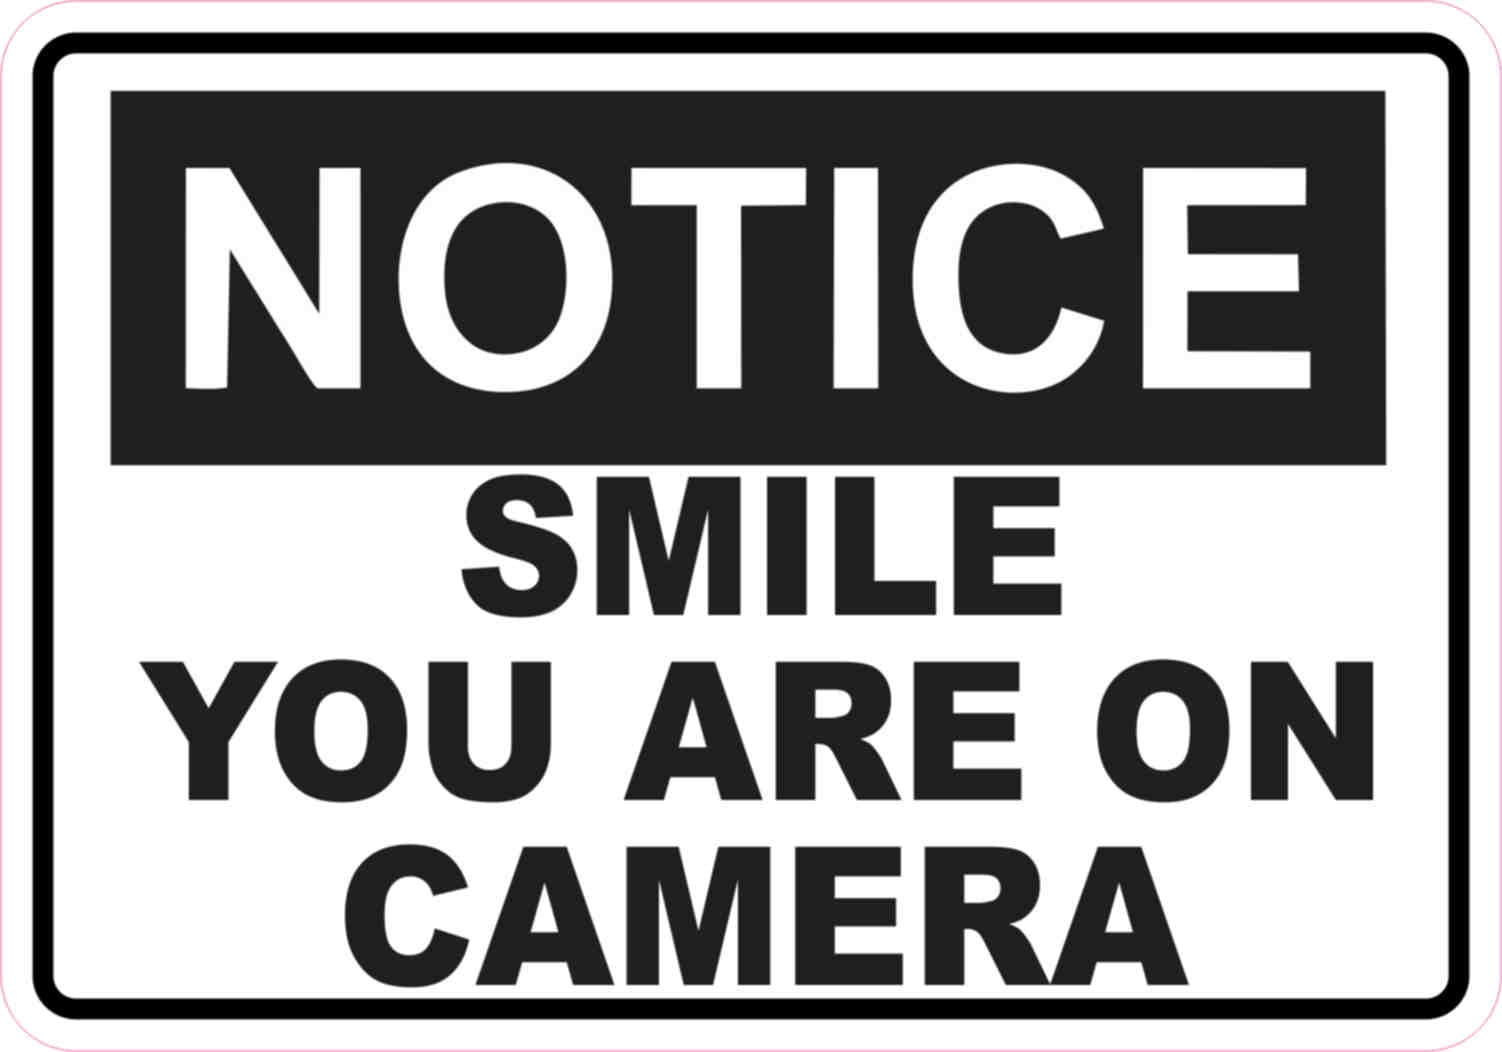 Warning On Board Camera Recording Dashcam Security Car Window Decal Sticker Hot 